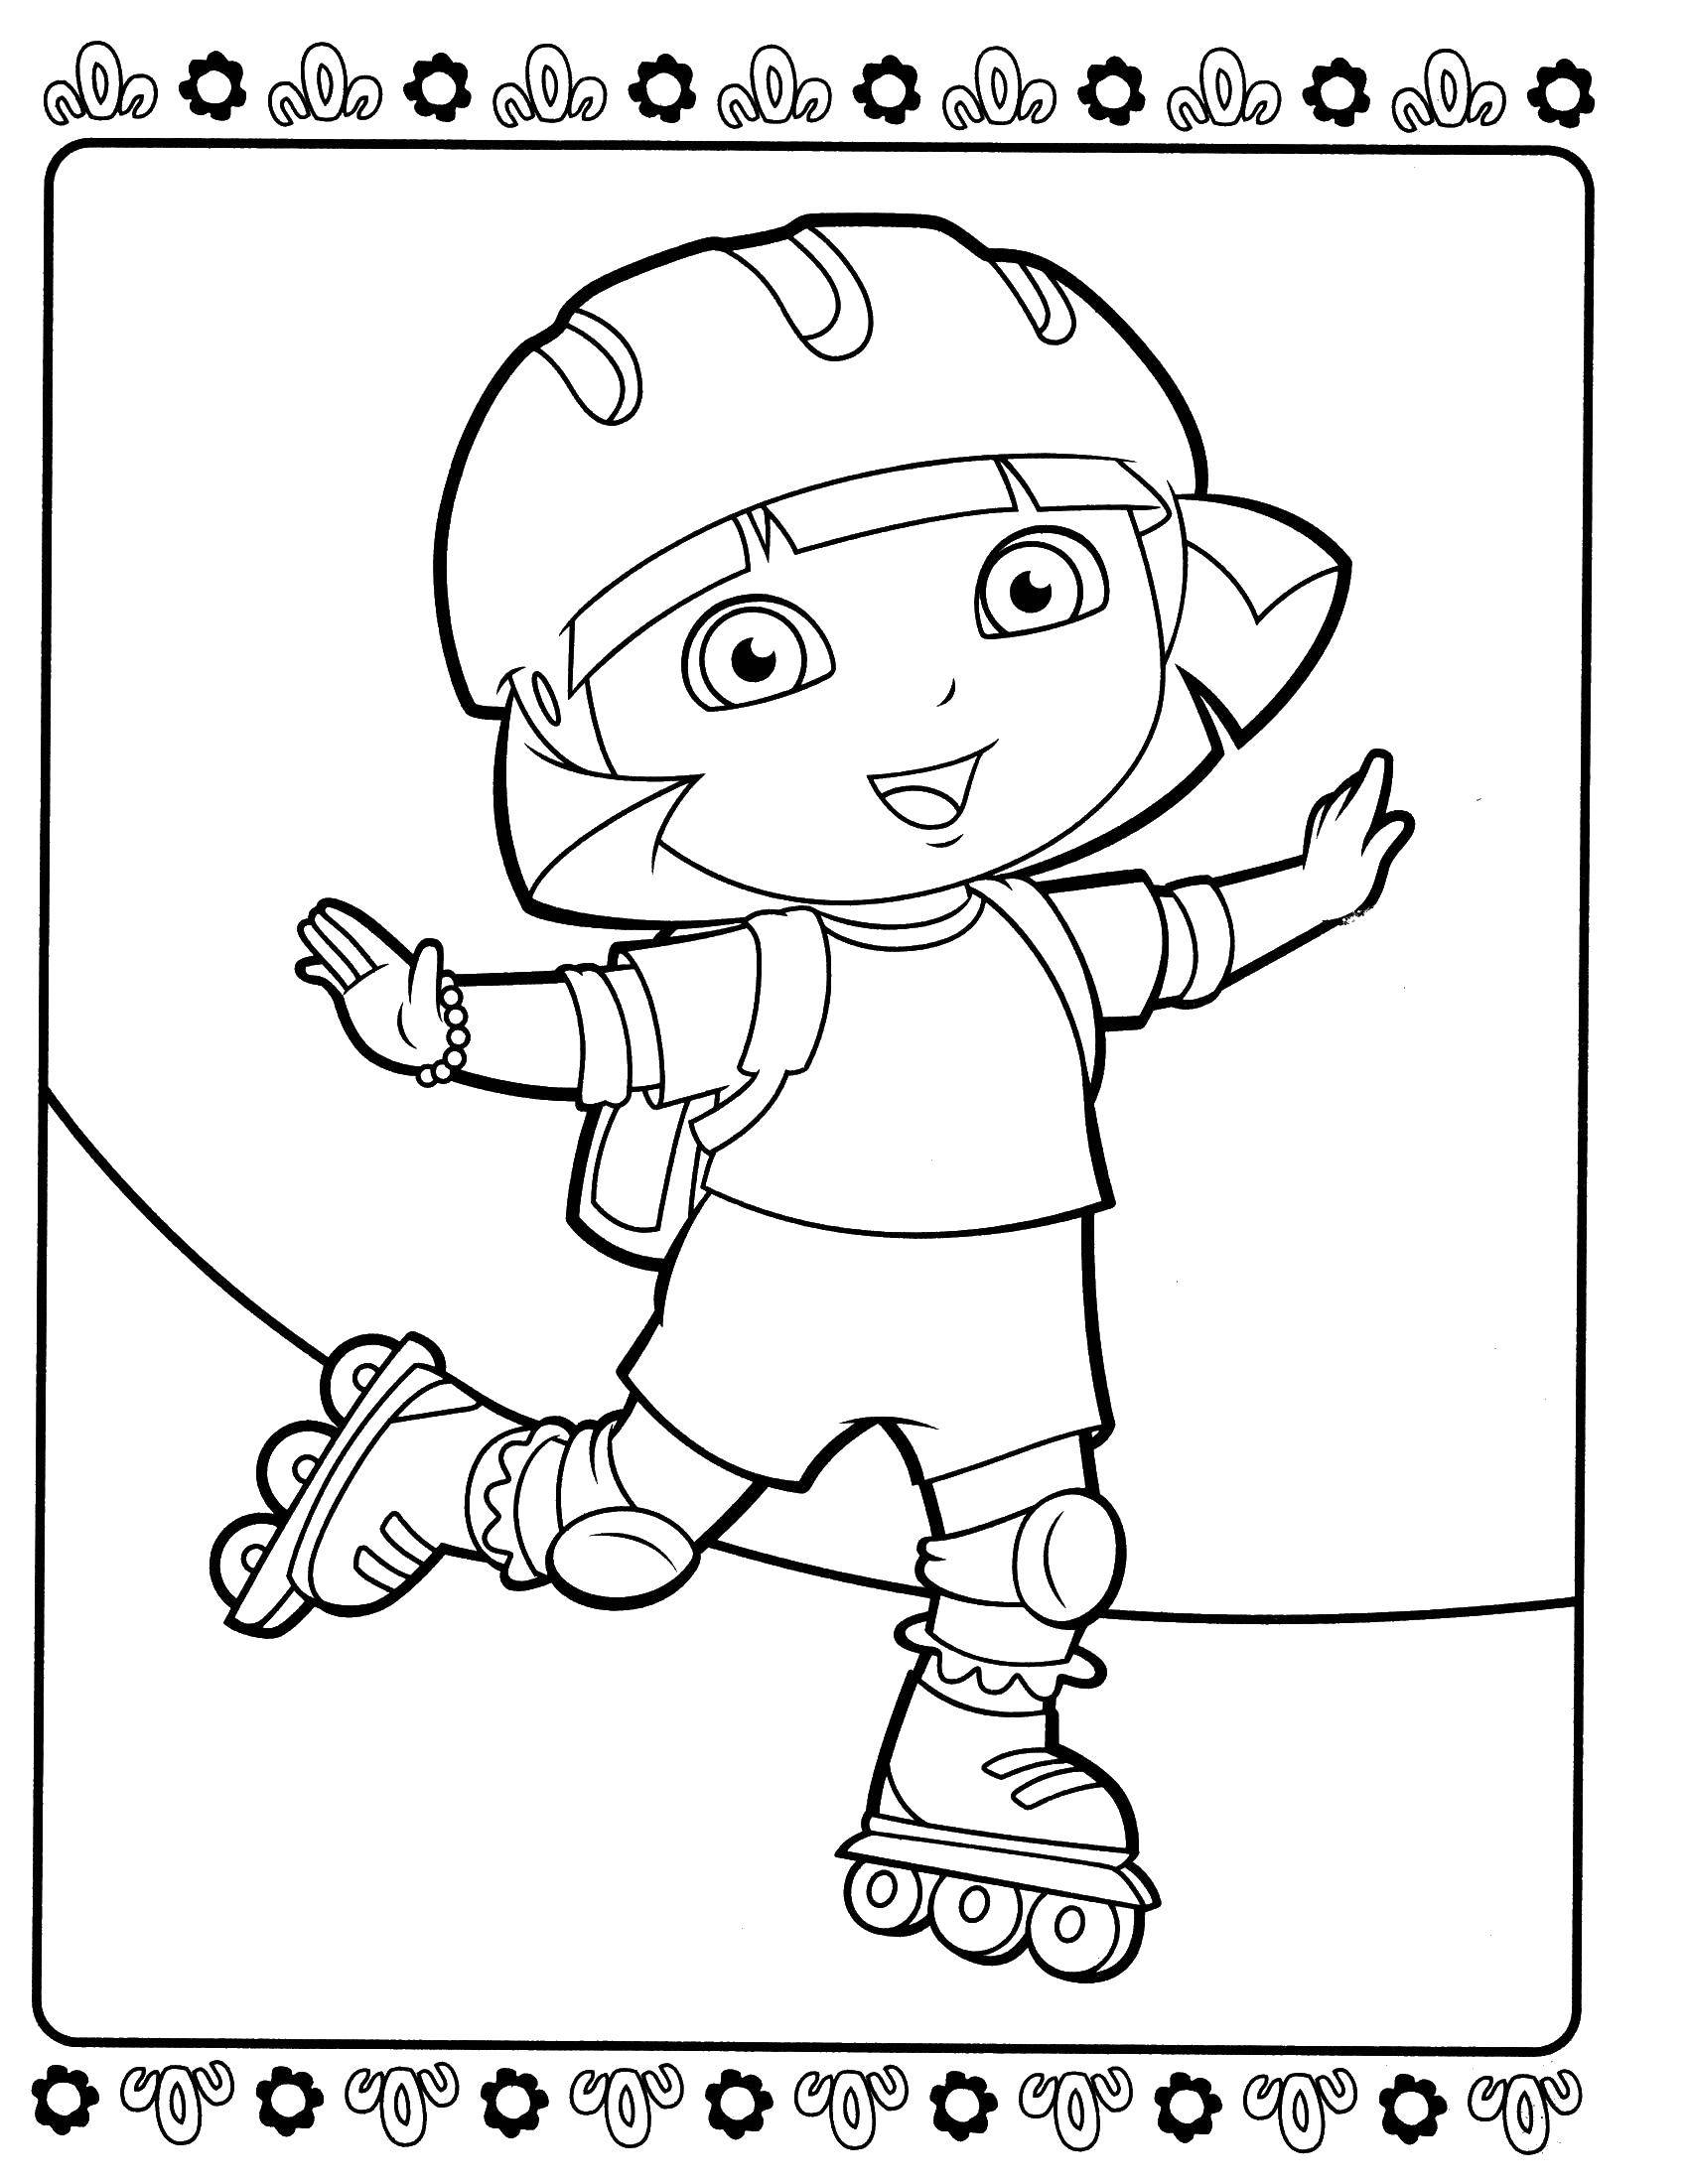 Coloring Dasha on roller skates. Category Cartoon character. Tags:  Cartoon character.